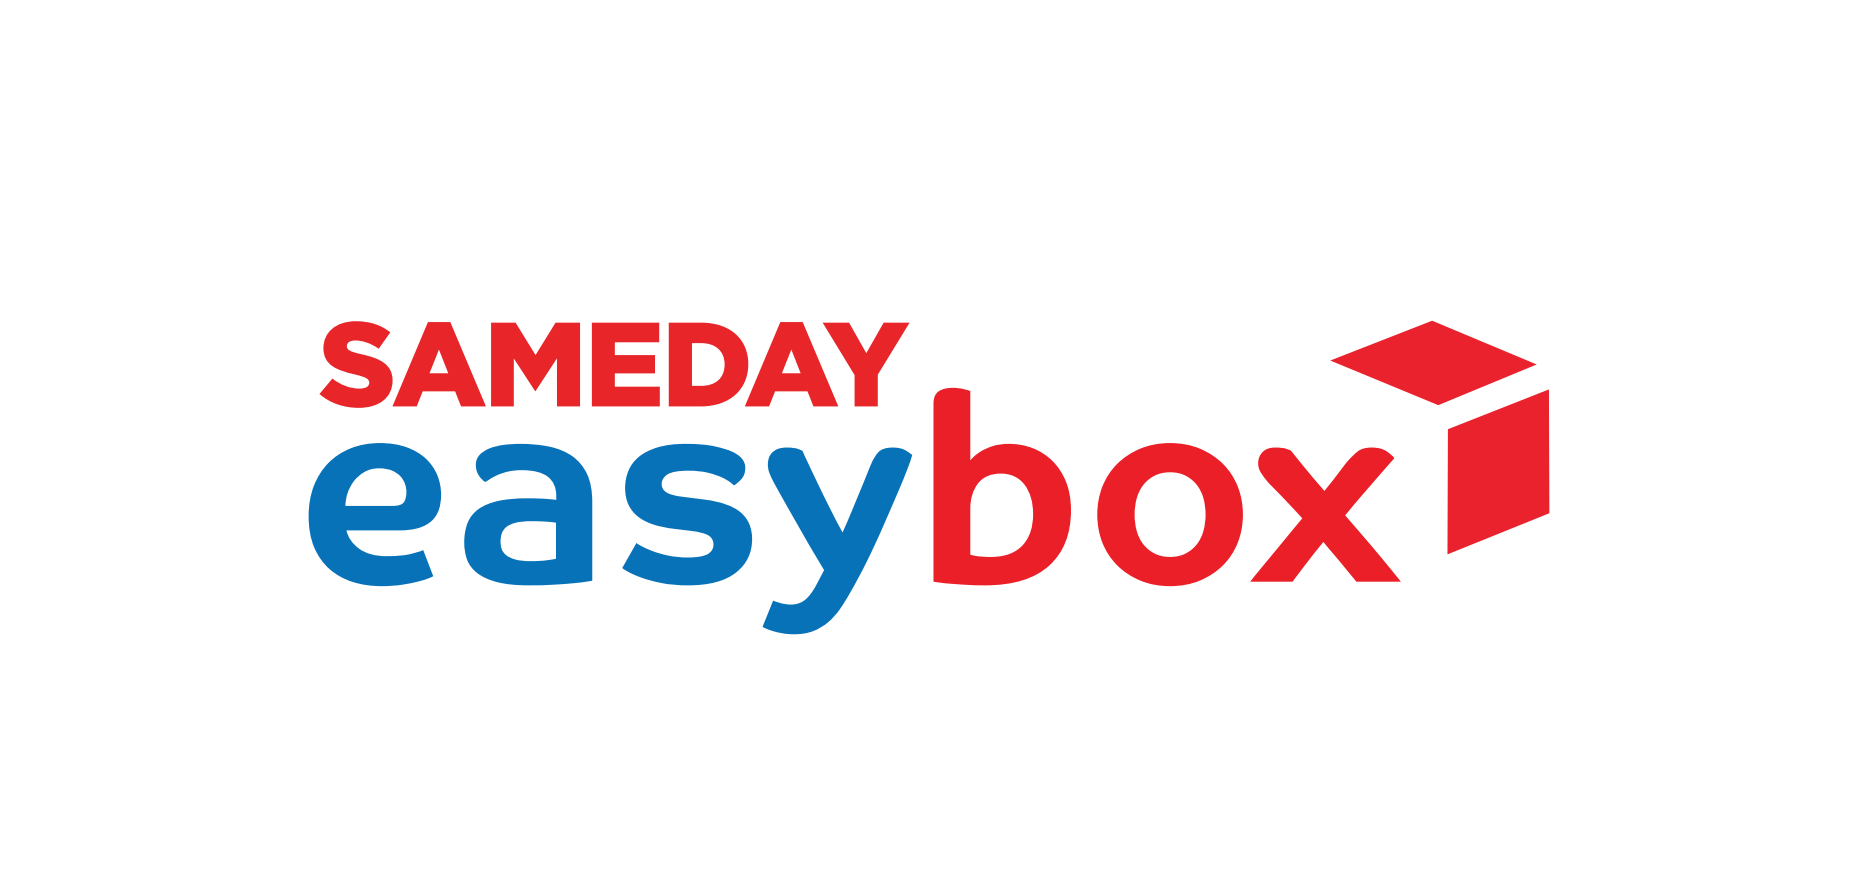 Sameday easybox